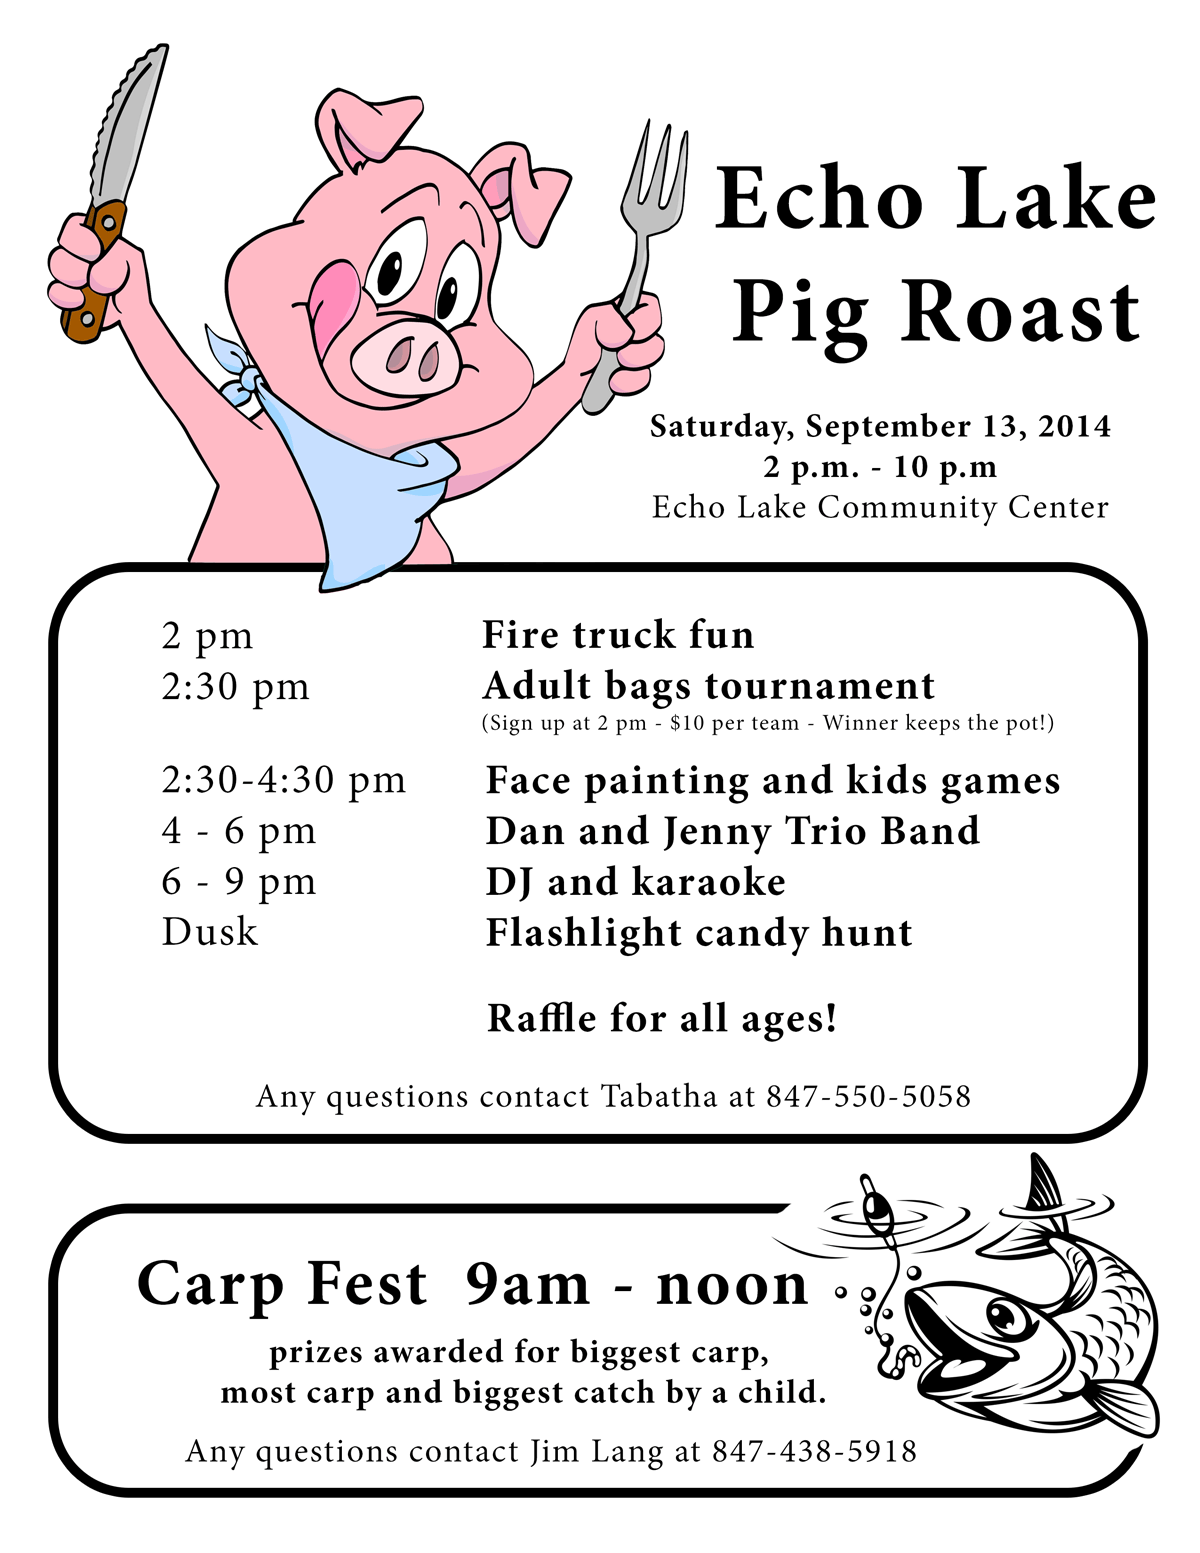 Echo Lake Pig Roast Flyer 2014